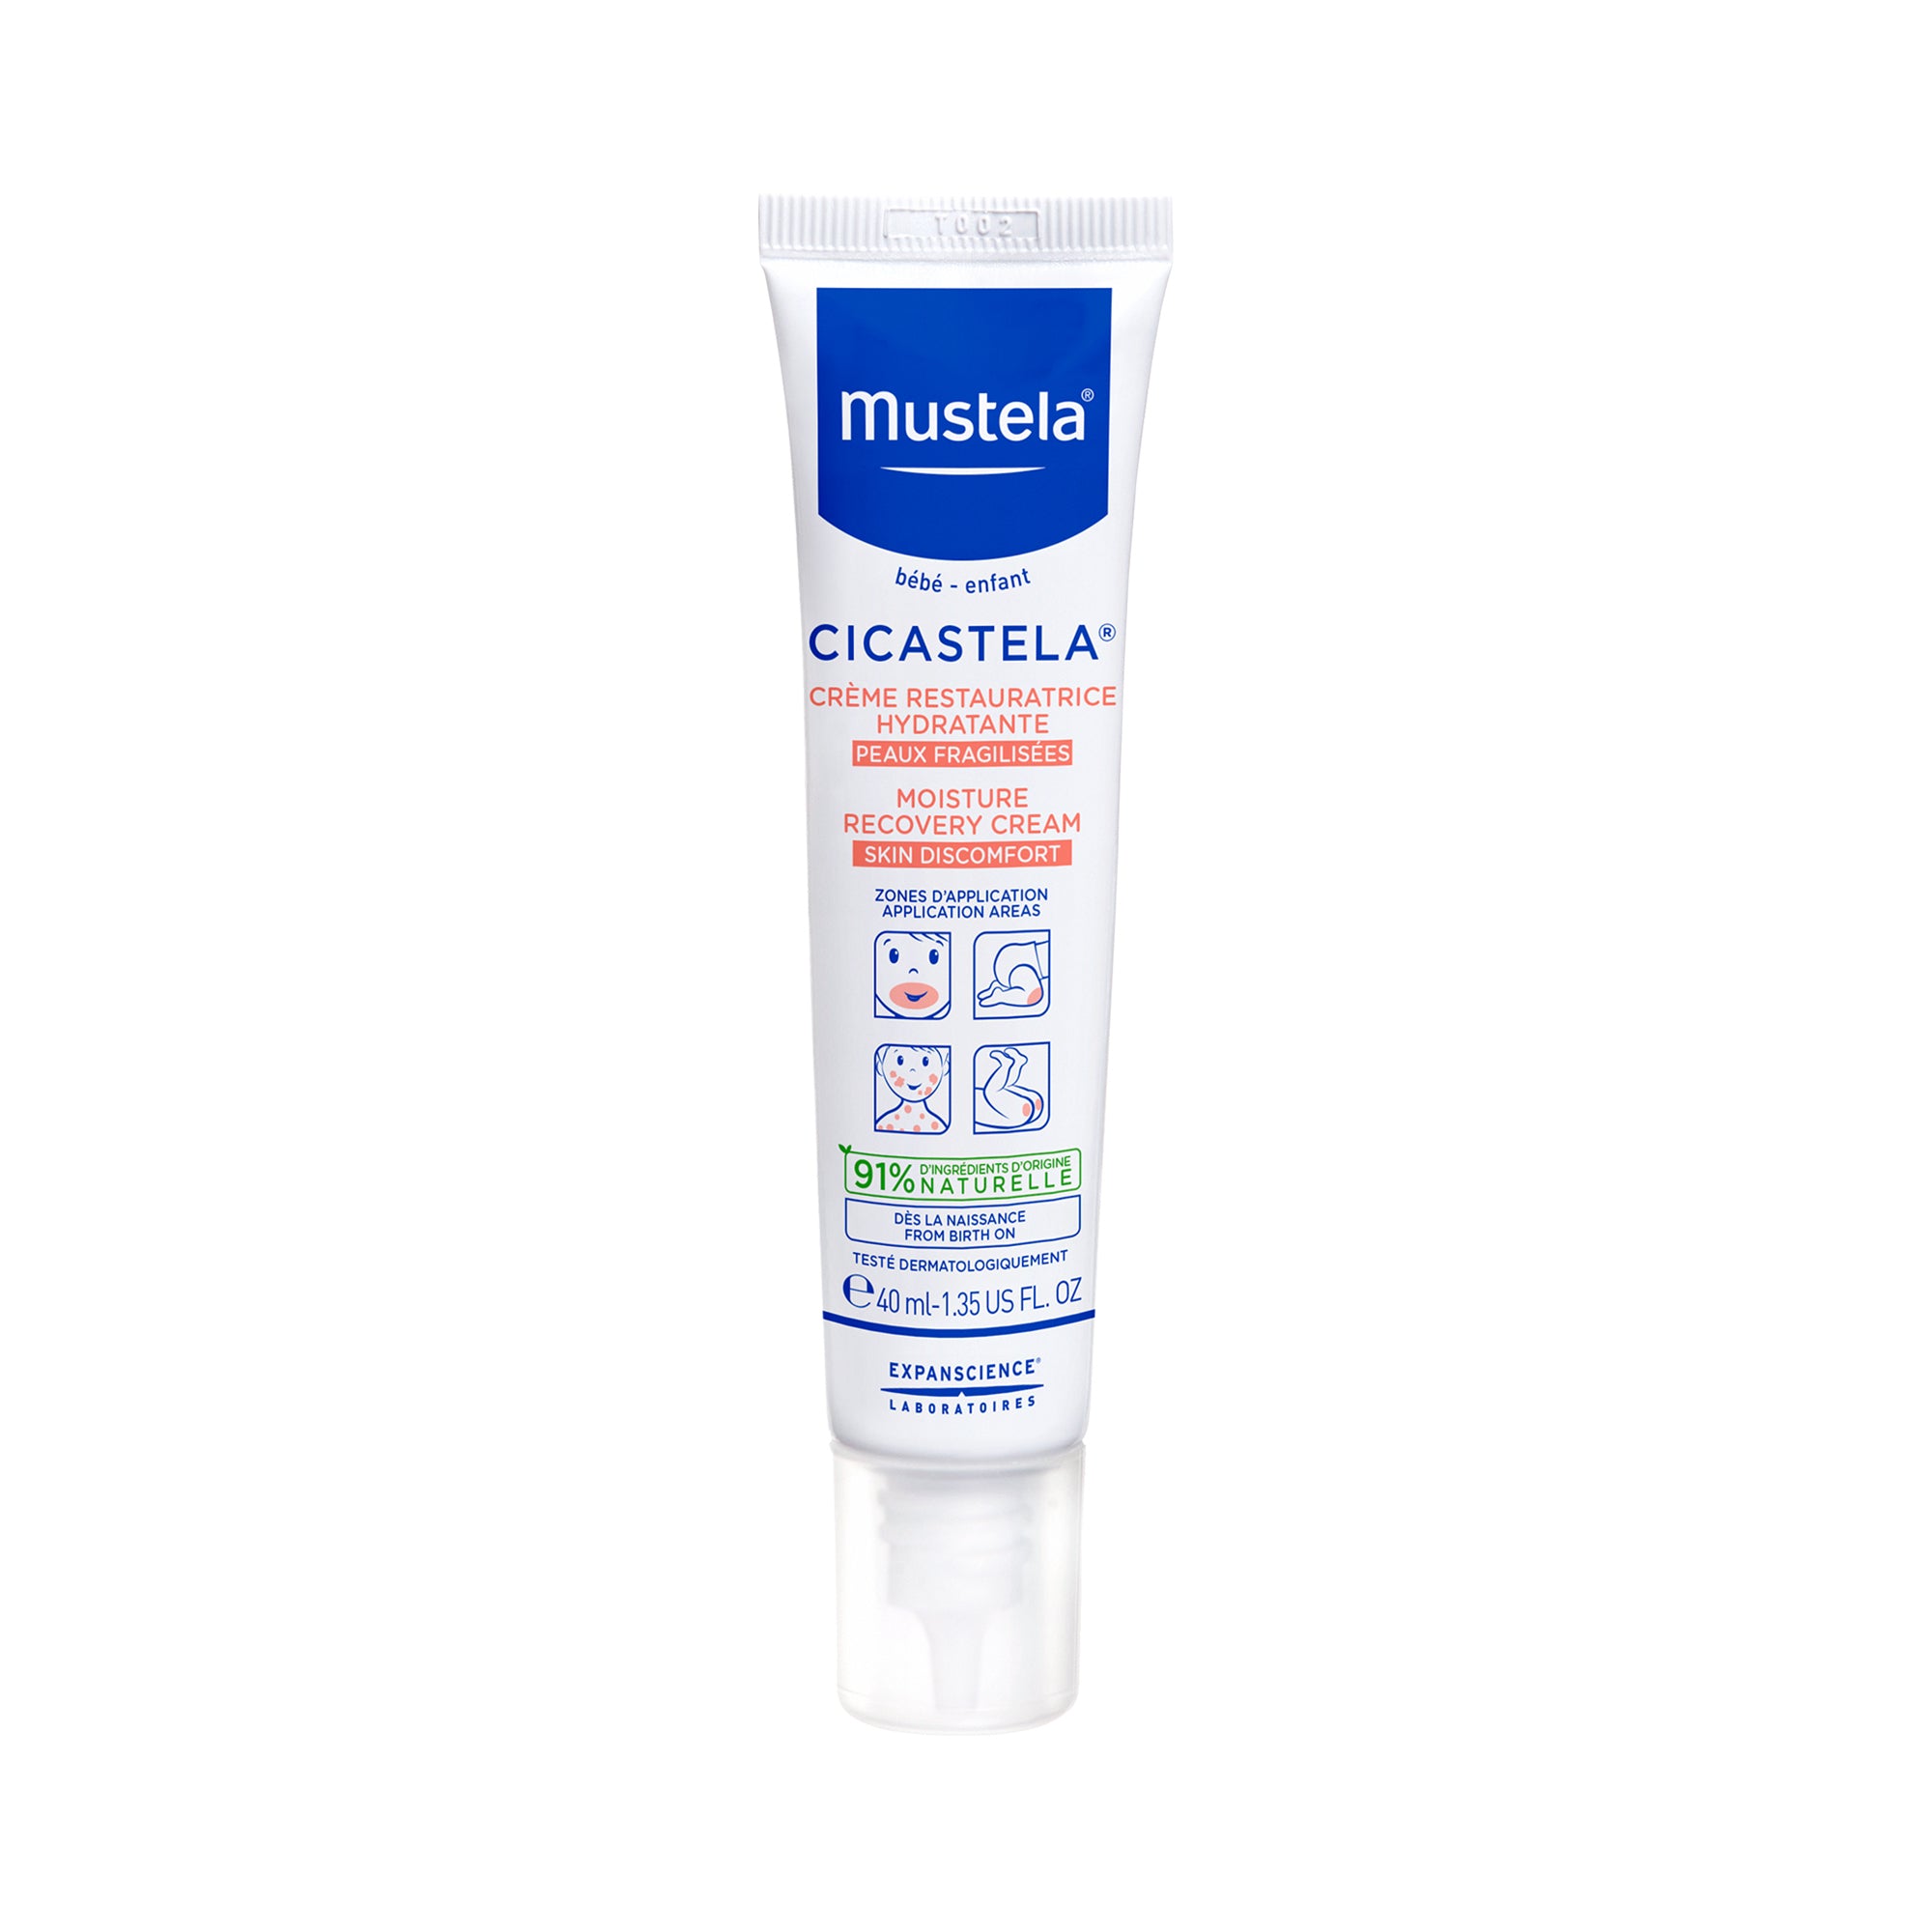 Mustela Cicastela Moisture Recovery Cream 40ml (Irritated Areas)